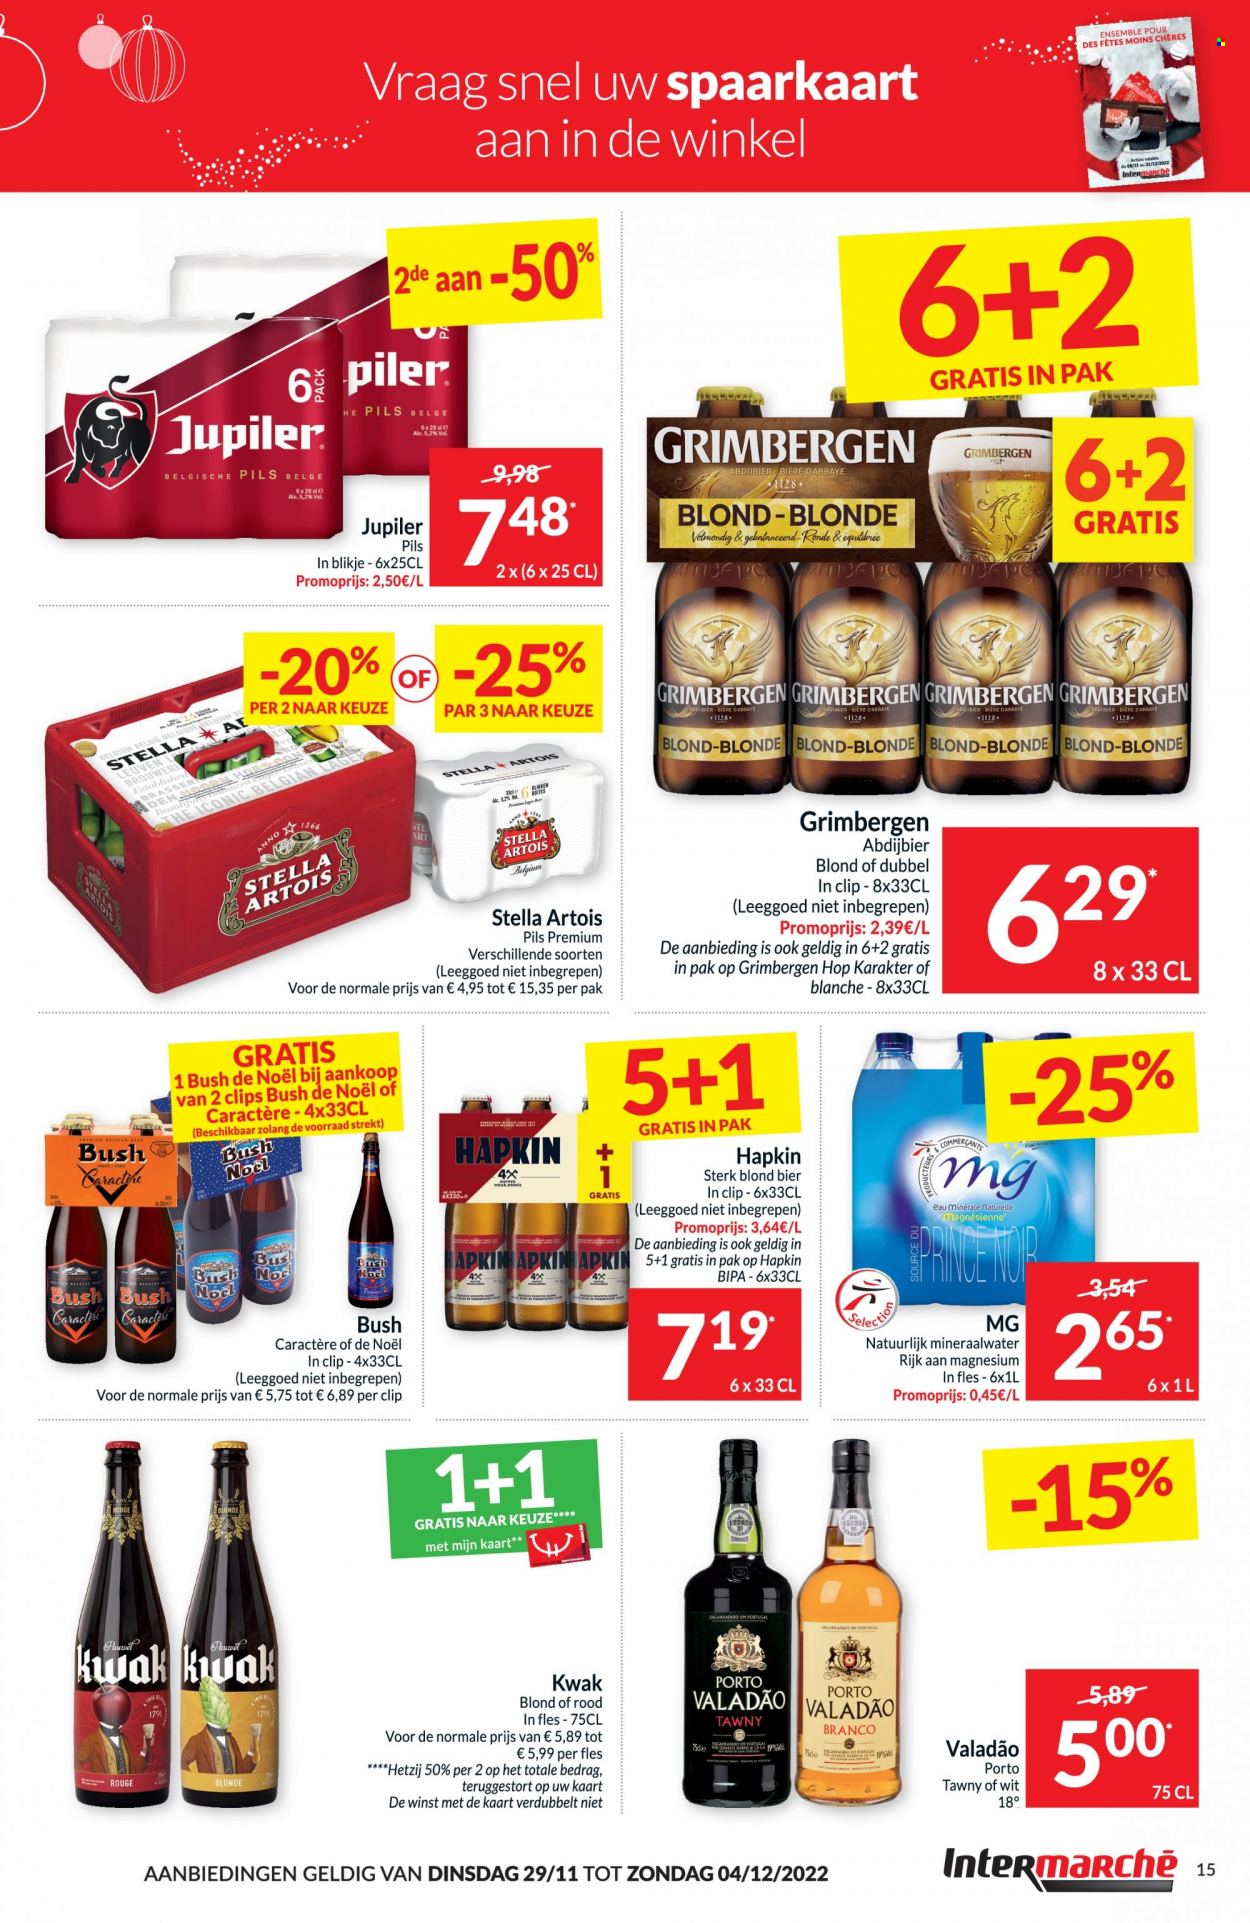 thumbnail - Intermarché-aanbieding - 29/11/2022 - 04/12/2022 -  producten in de aanbieding - Stella Artois, Jupiler, bier, mineraalwater, porto, magnesium. Pagina 15.